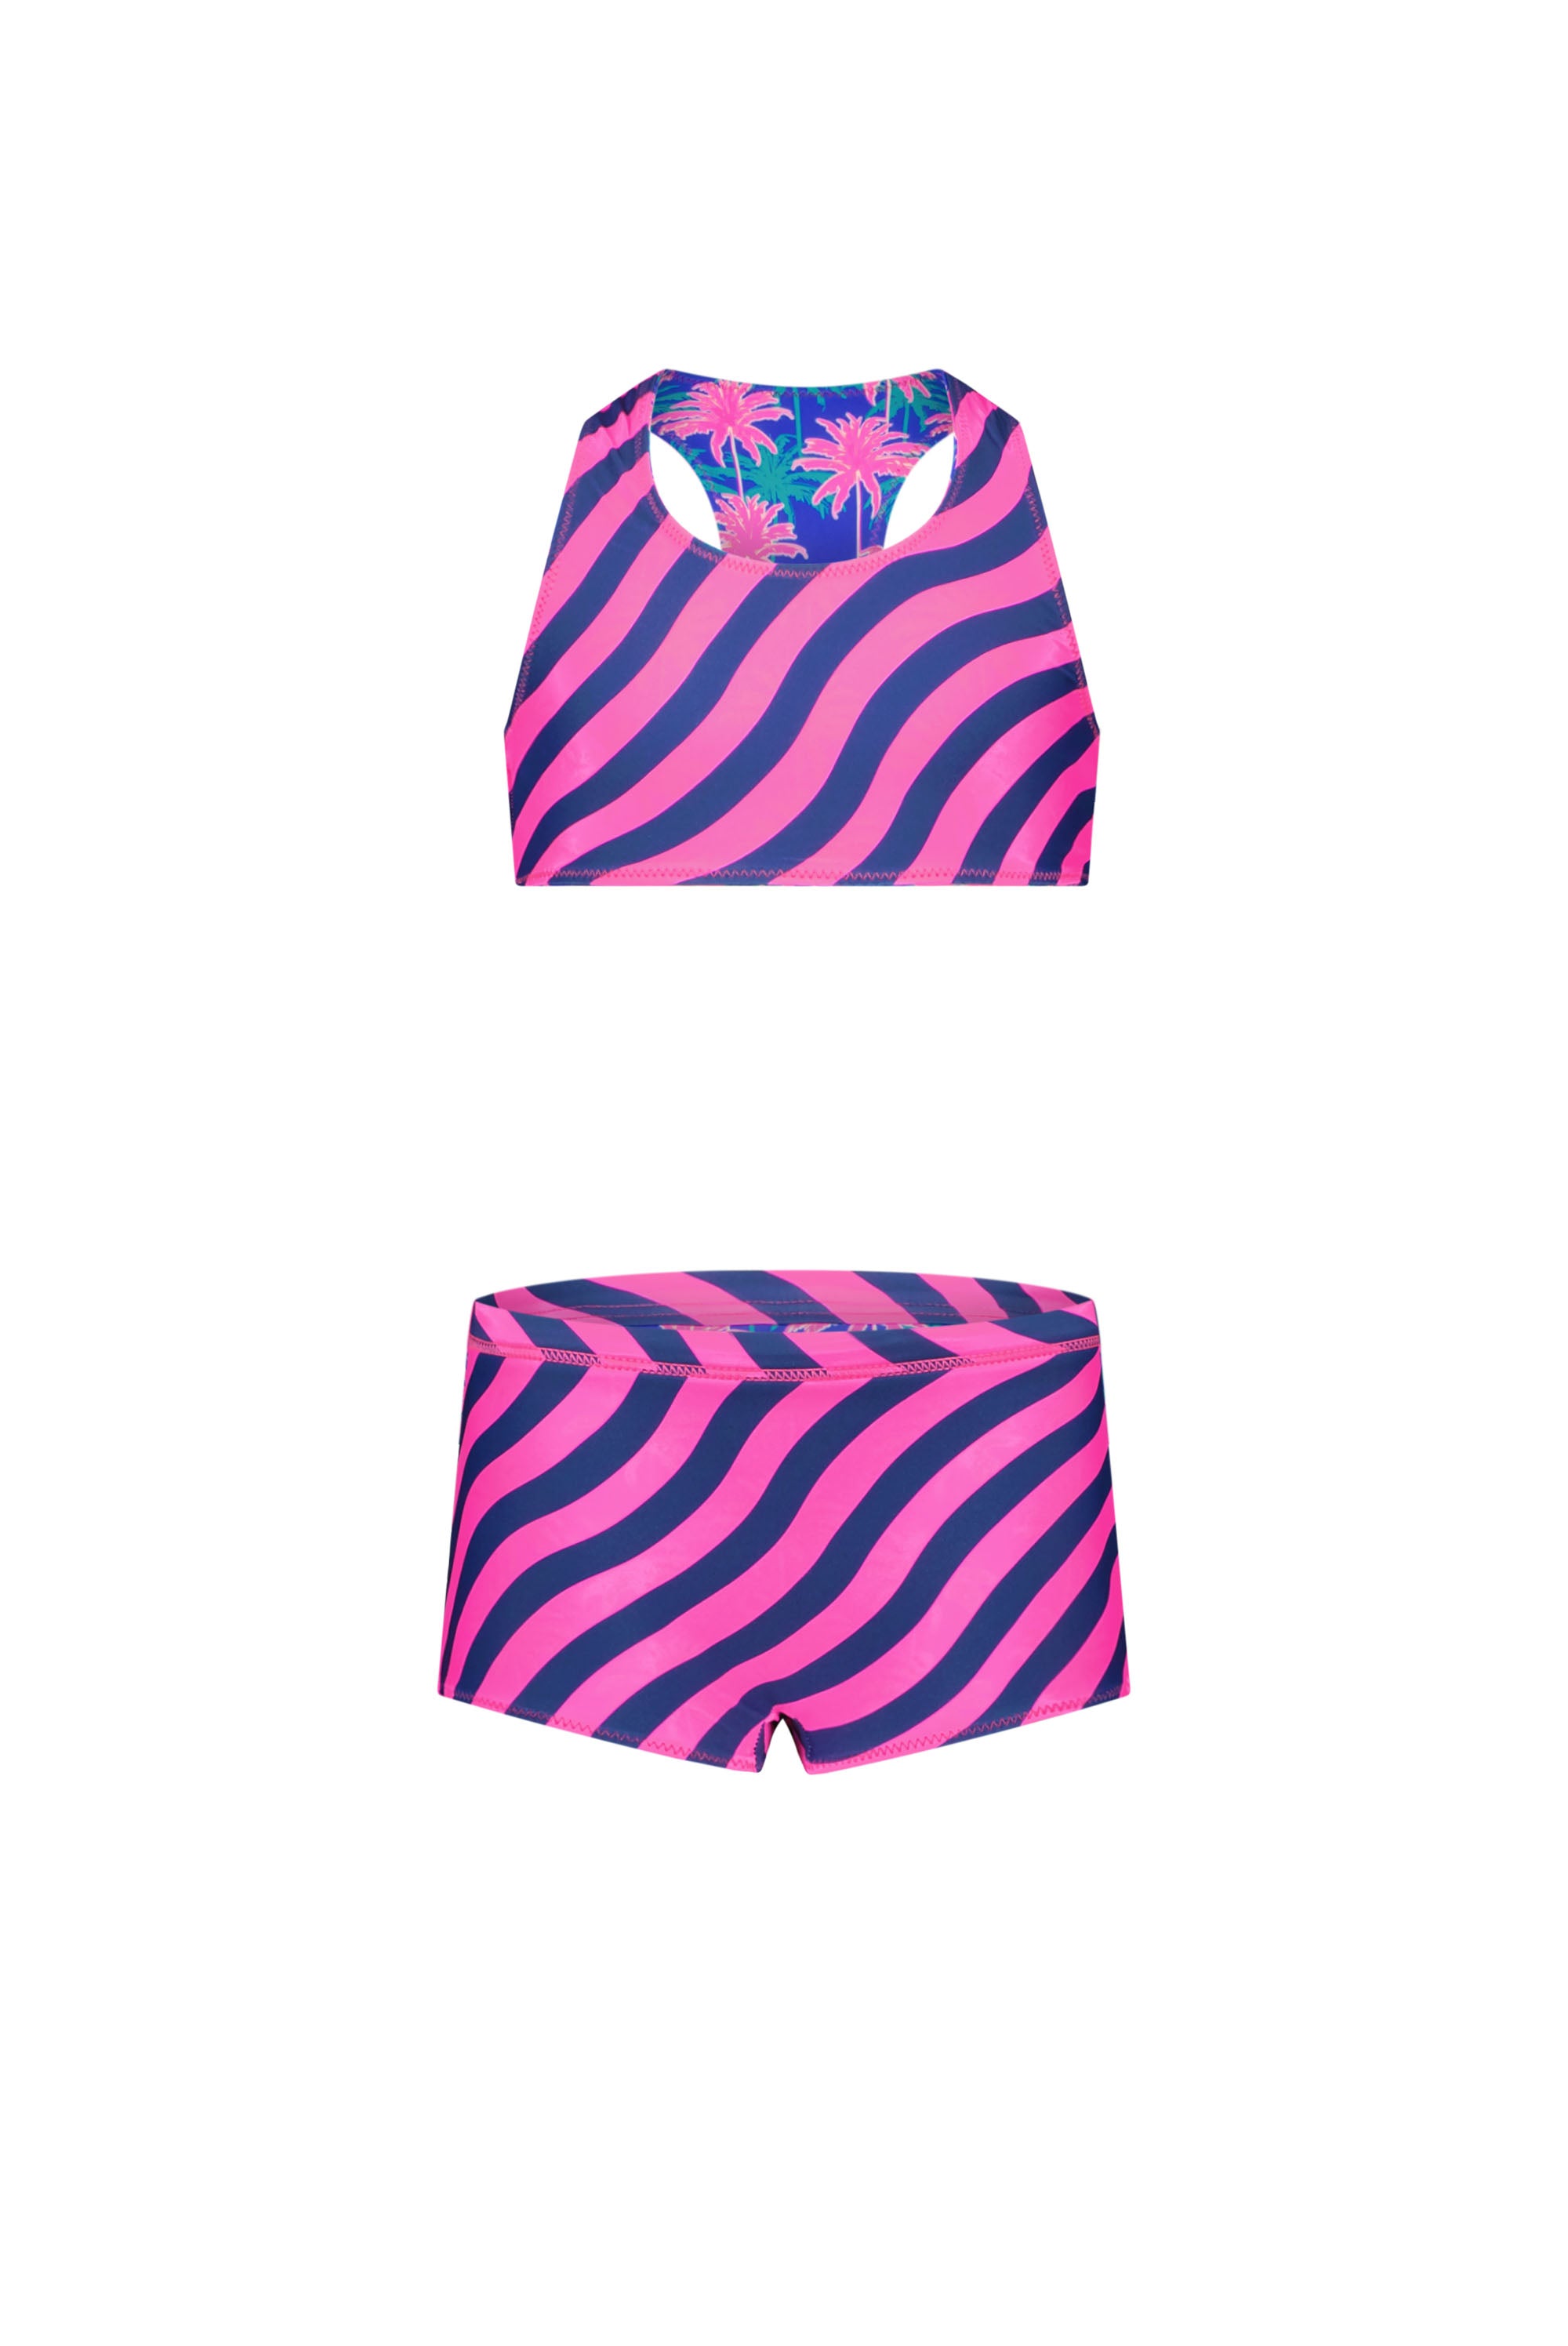 Just Beach Girls reversible bikini w/ leo ocean + tropical leaves